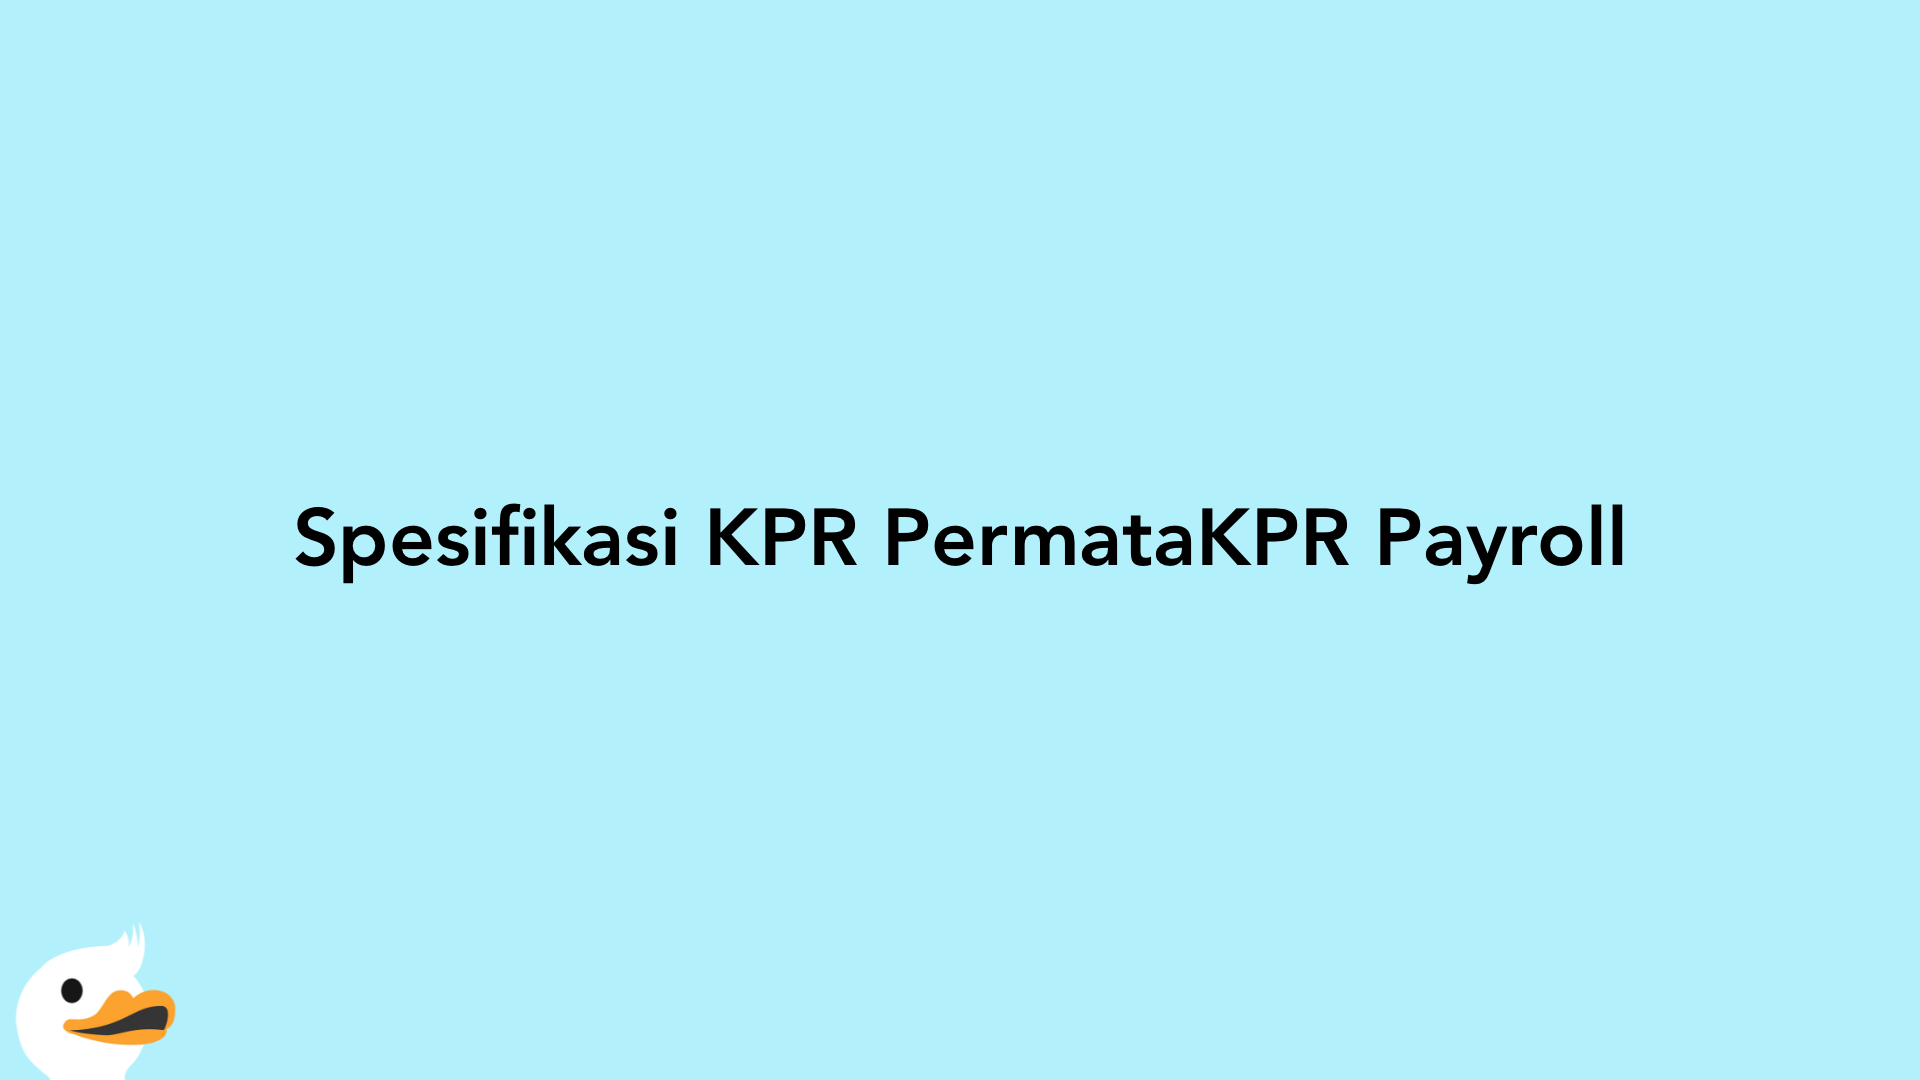 Spesifikasi KPR PermataKPR Payroll